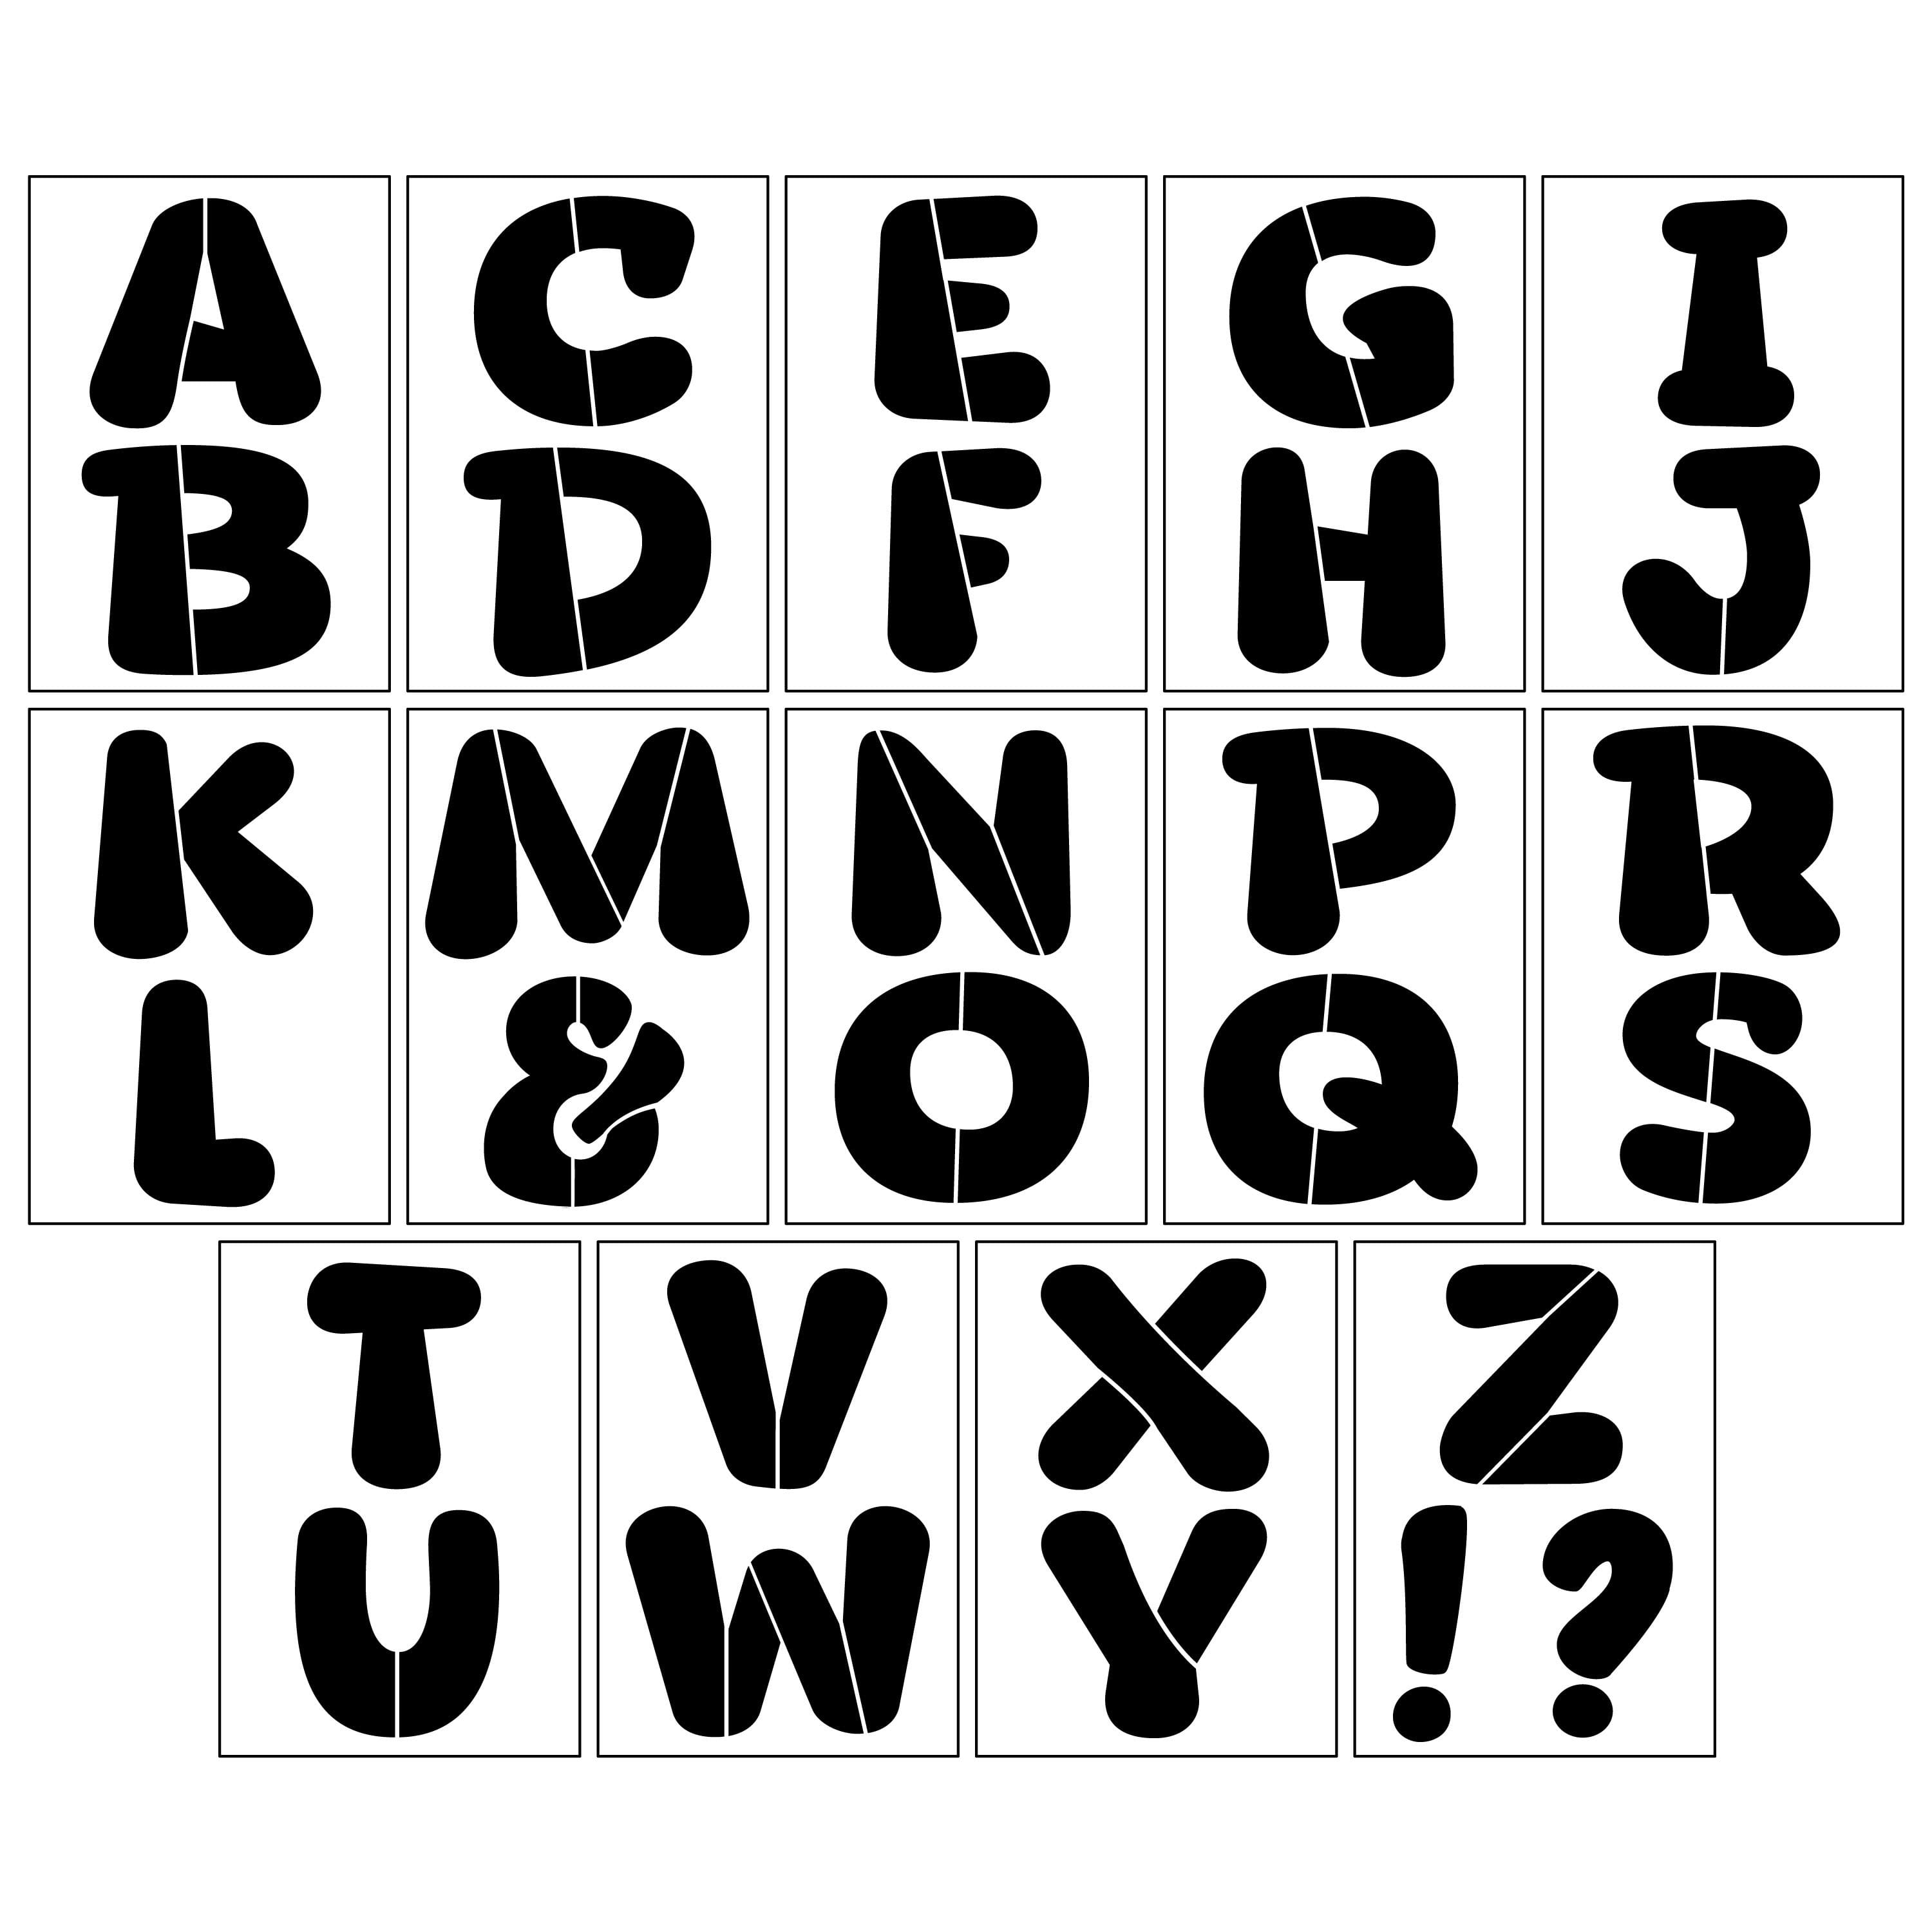 The Alphabet Stencil